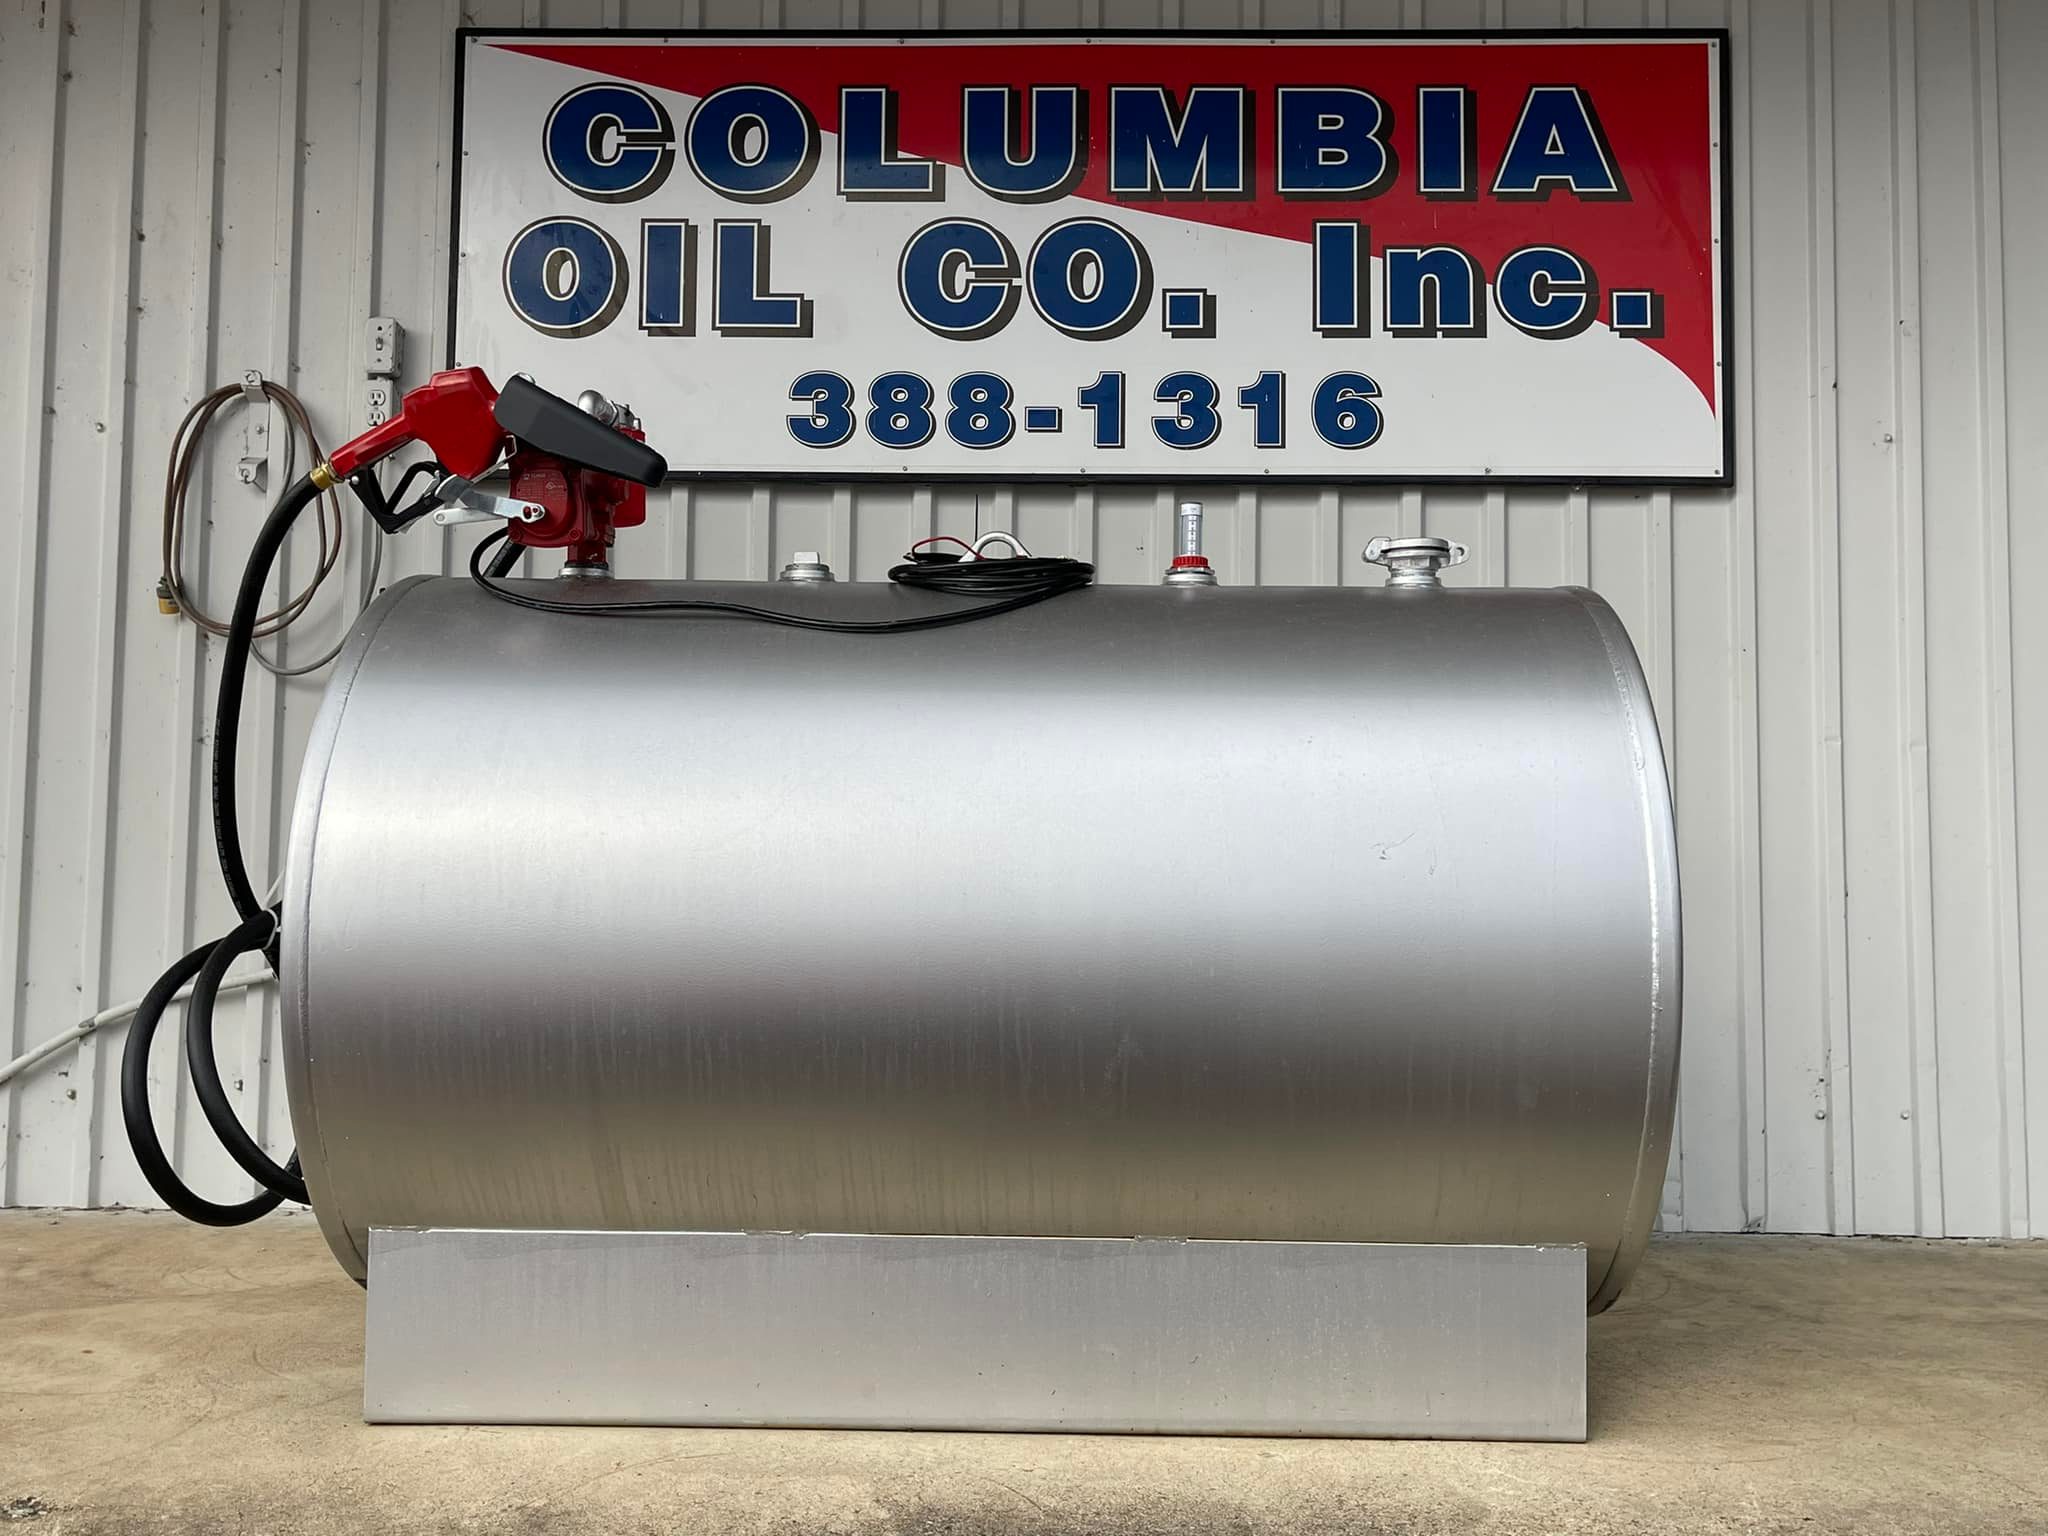 Columbia Oil Co. Inc.